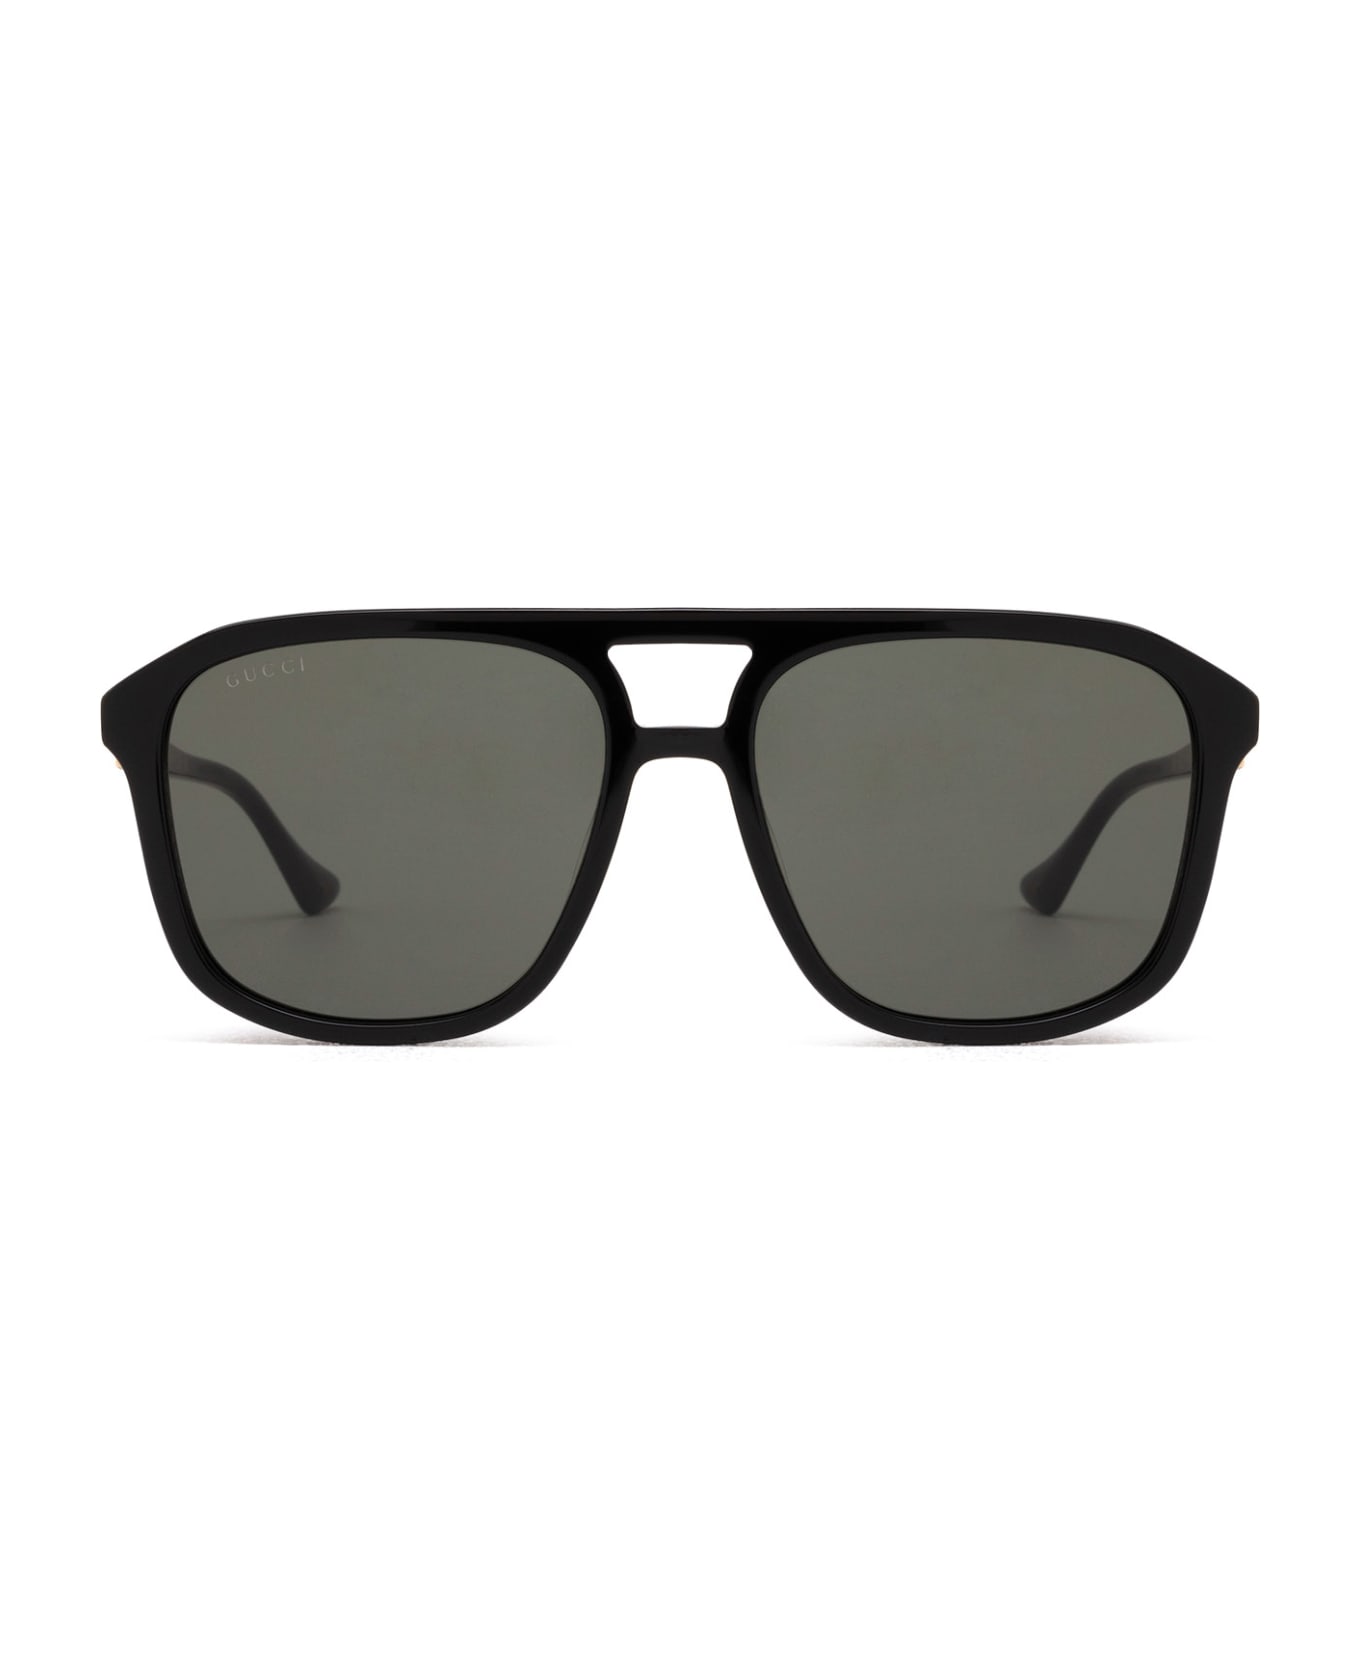 Gucci Eyewear Gg1494s Black Sunglasses - Black